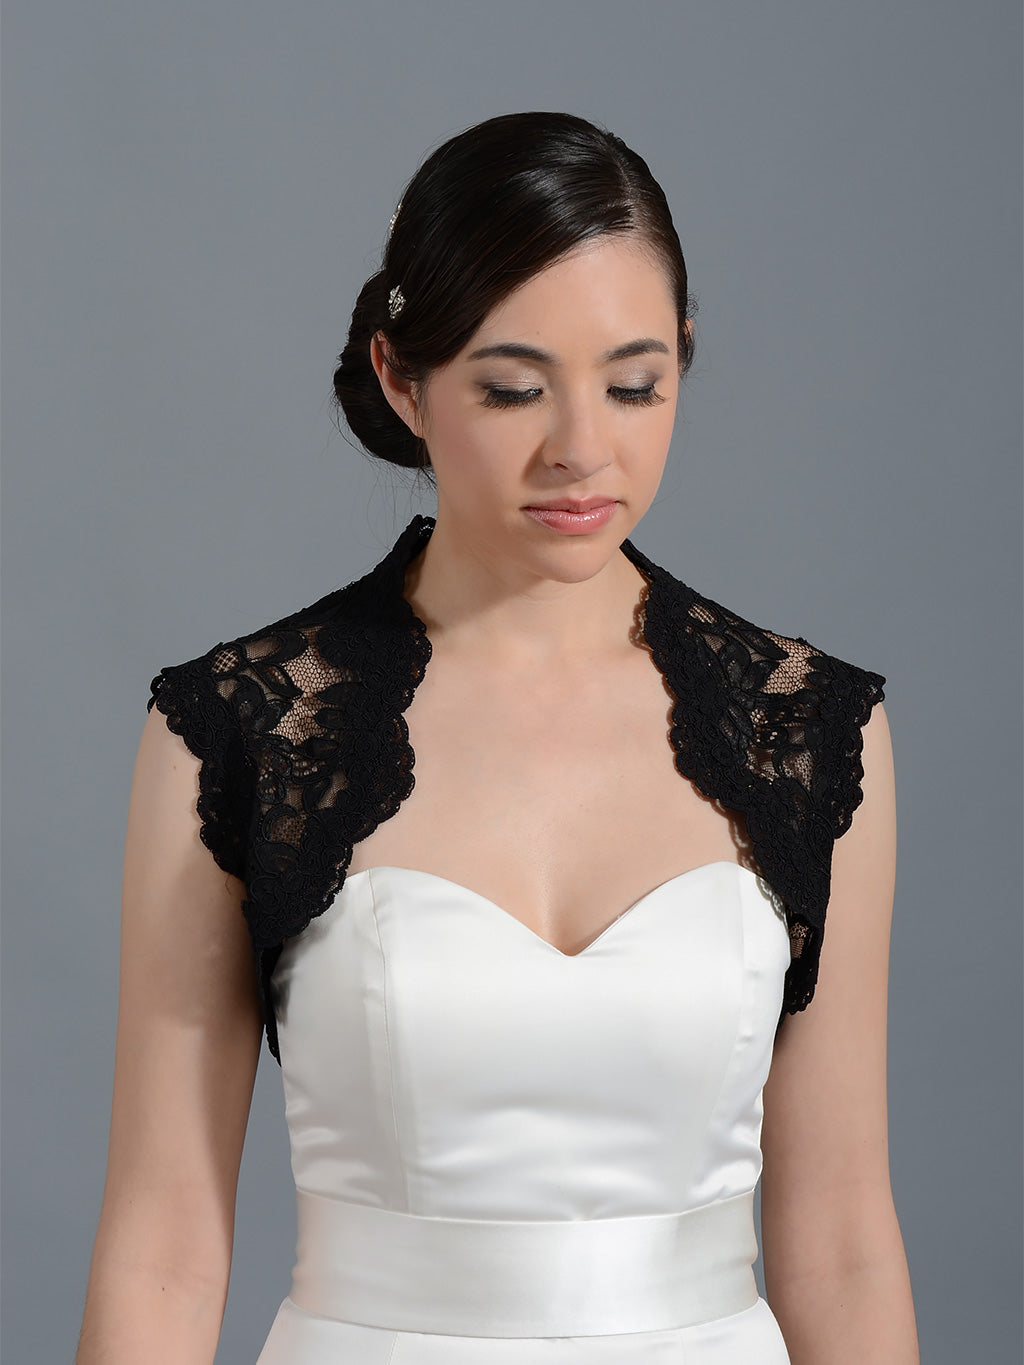 Black sleeveless bridal alencon lace bolero jacket Lace_064